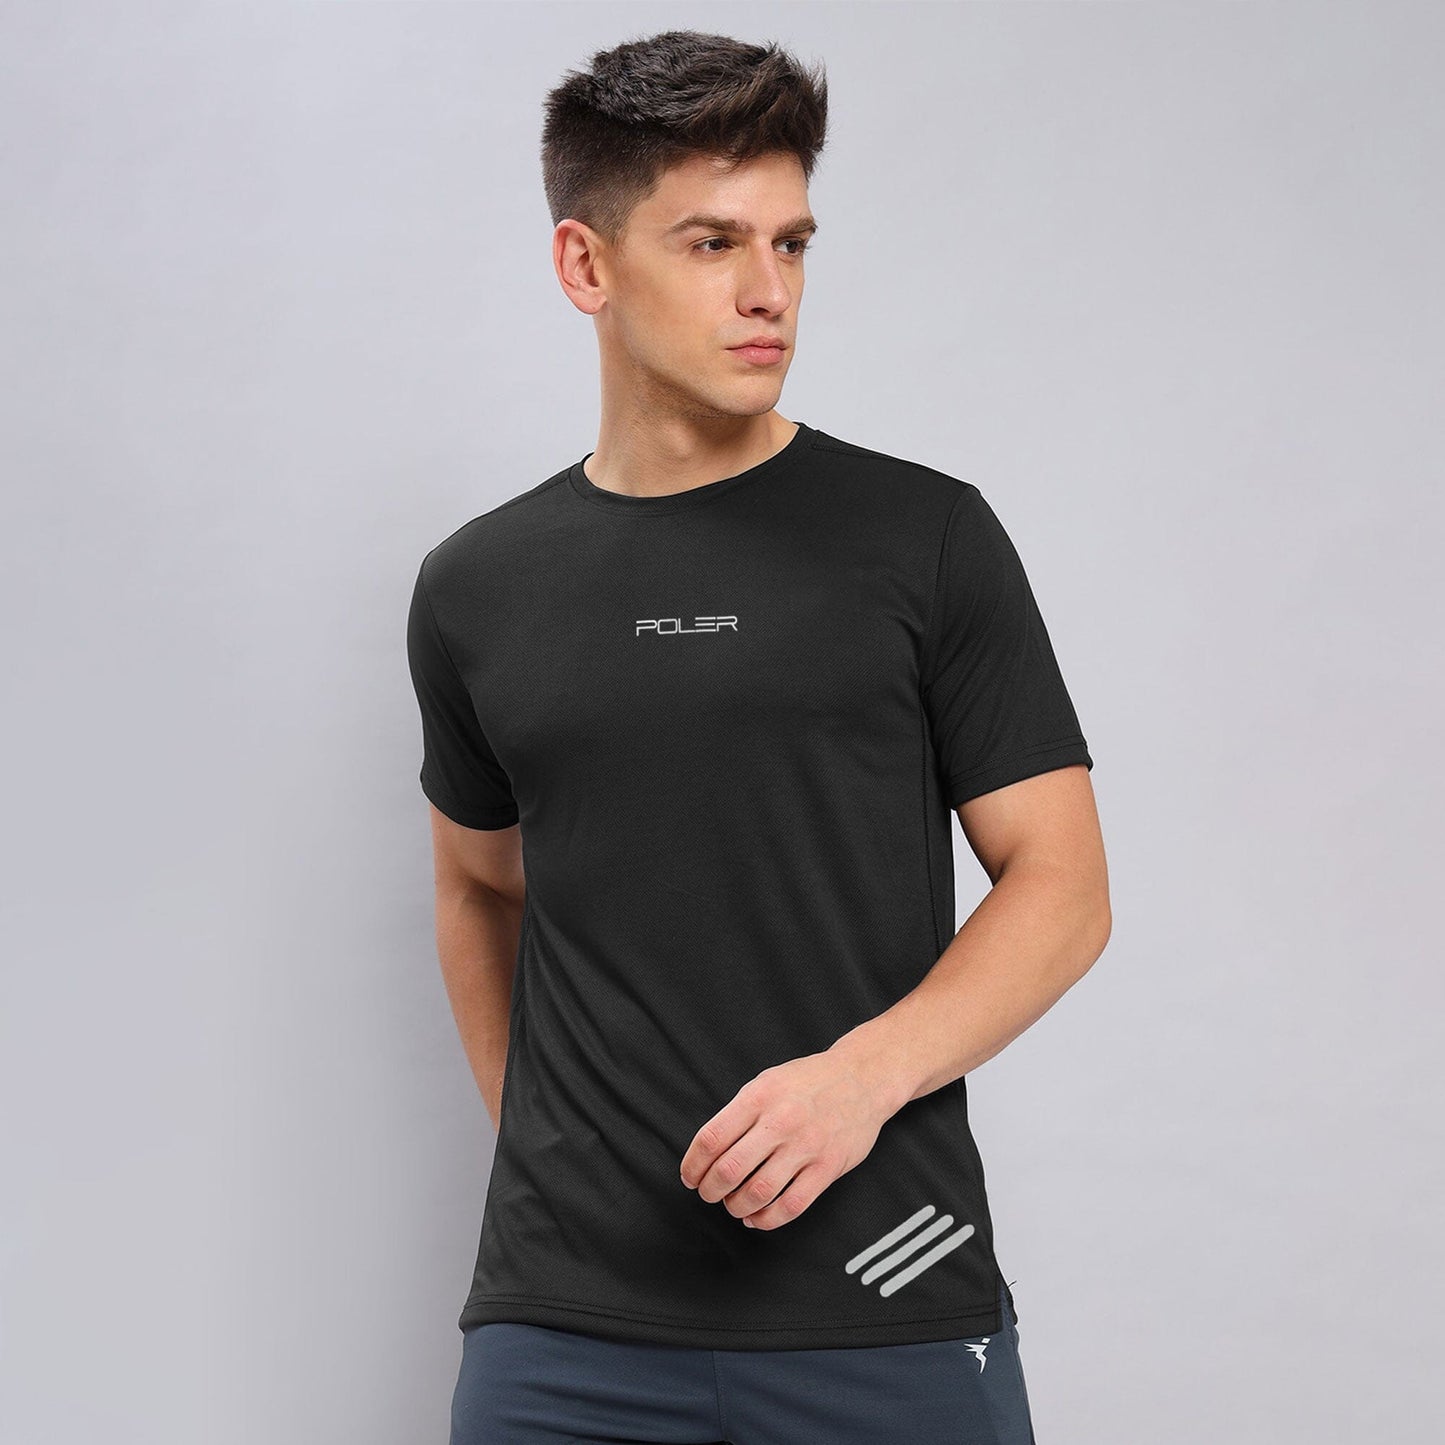 Men's Bottom Stripes Design Activewear Crew Neck Minor Fault Tee Shirt